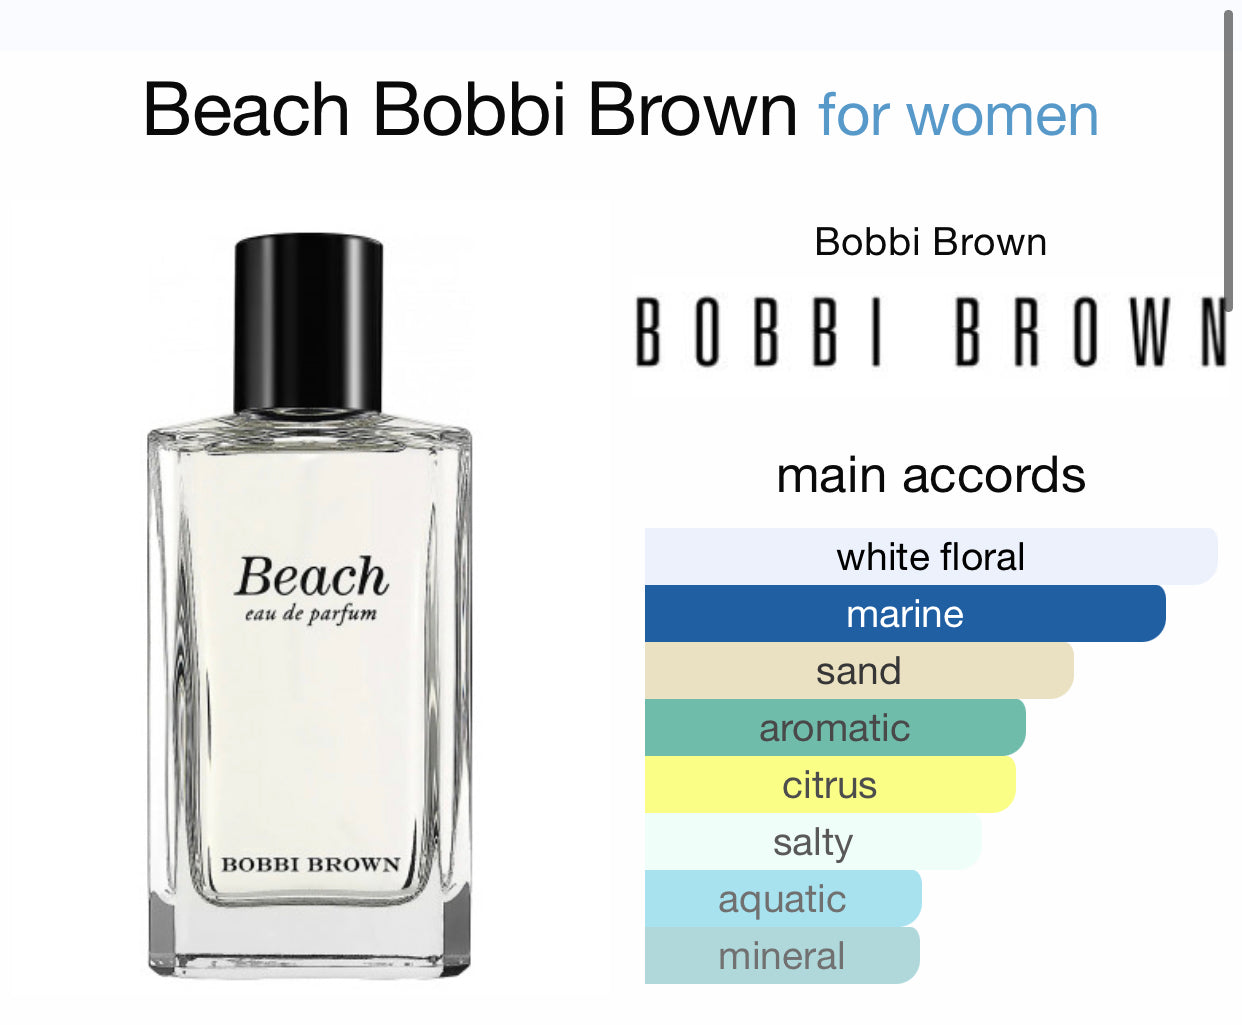 Inspired by Beach Eau De Parfum from Bobbi Brown